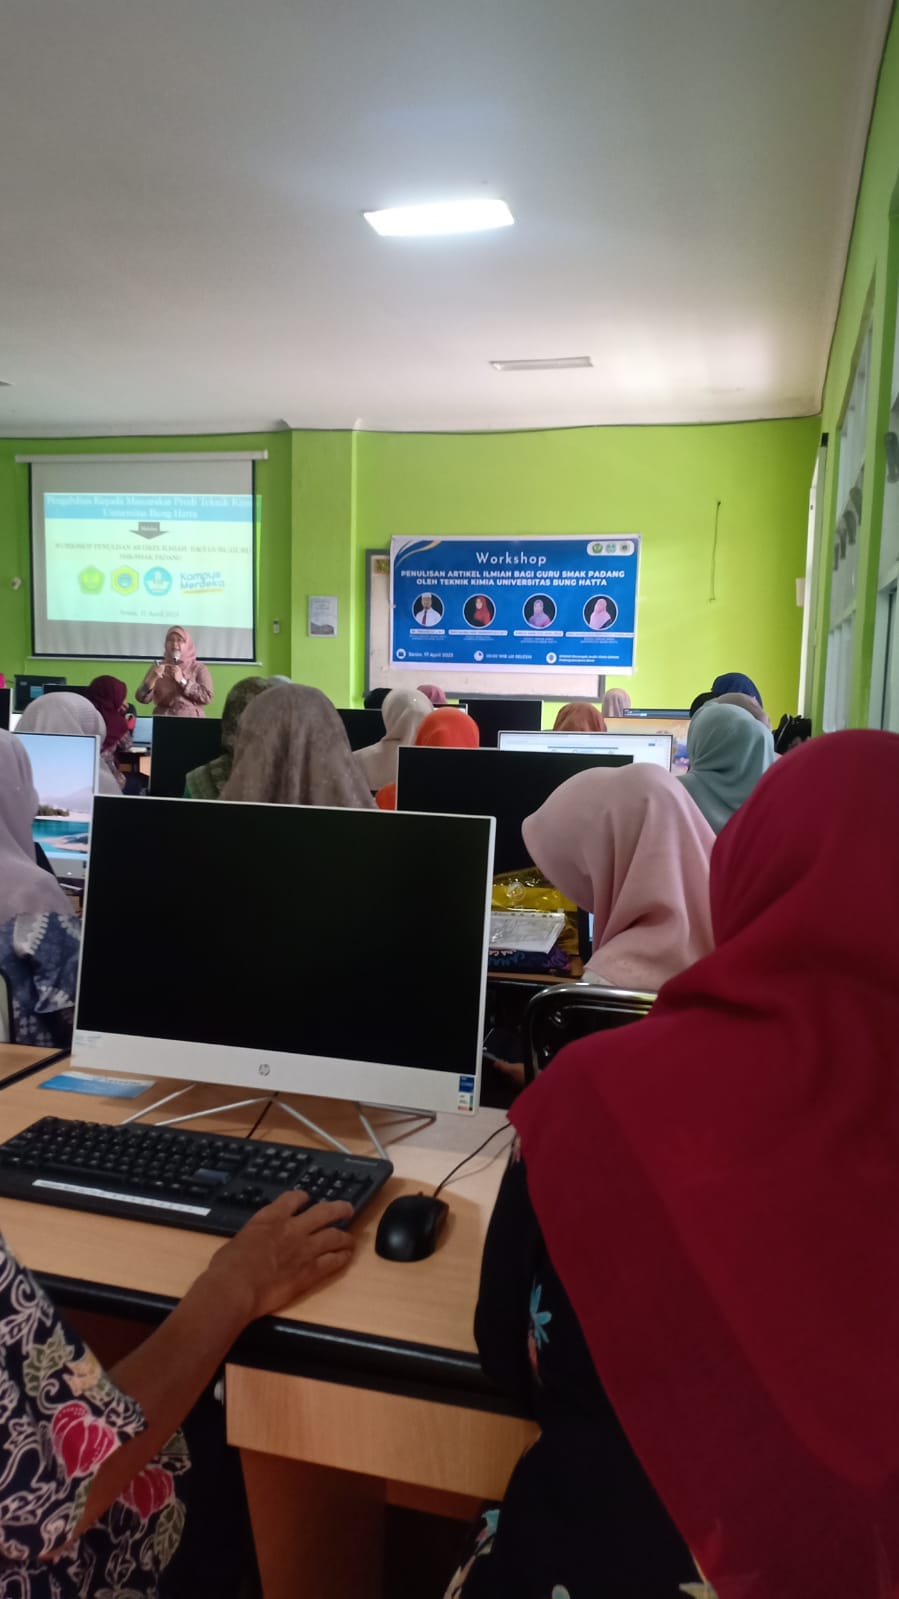 Prodi Teknik Kimia FTI Universitas Bung Hatta Adakan Workshop Penulisan Artikel Ilmiah bagi Guru SMAK Padang: "Optimis Terbit di 5 Jurnal Terindeks Scopus dan Sinta